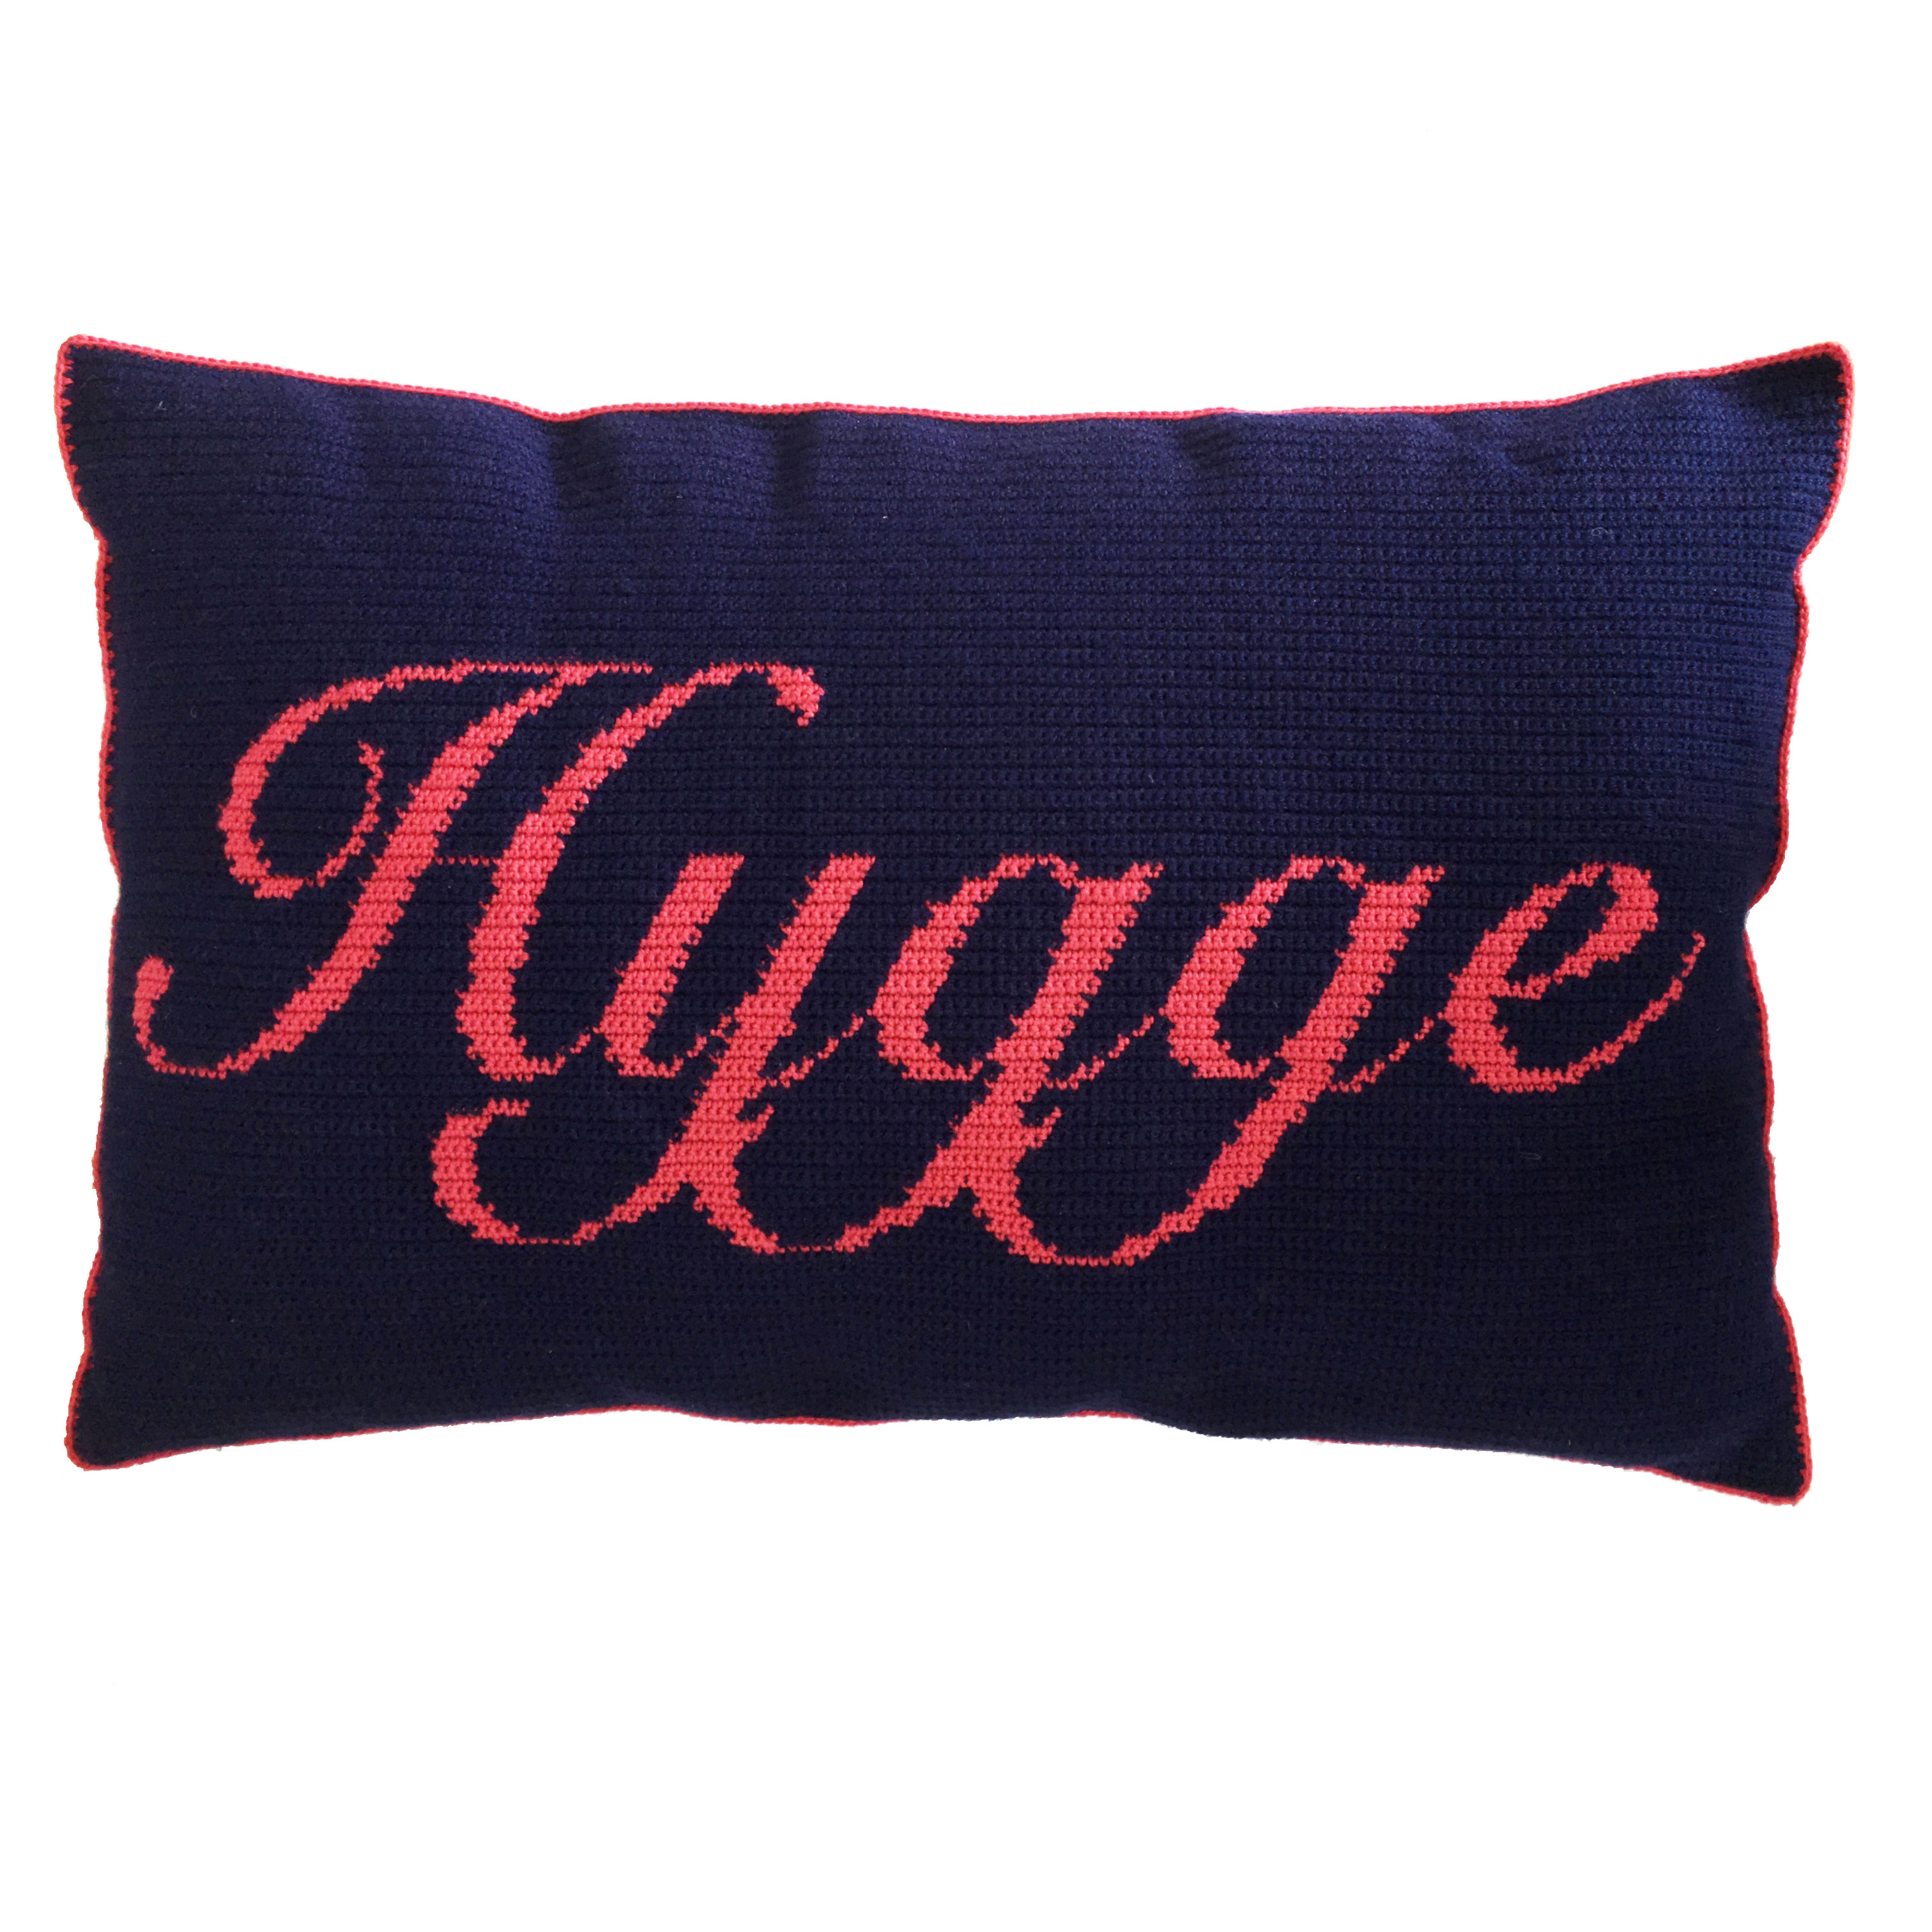 Crocheted Hygge Cushion